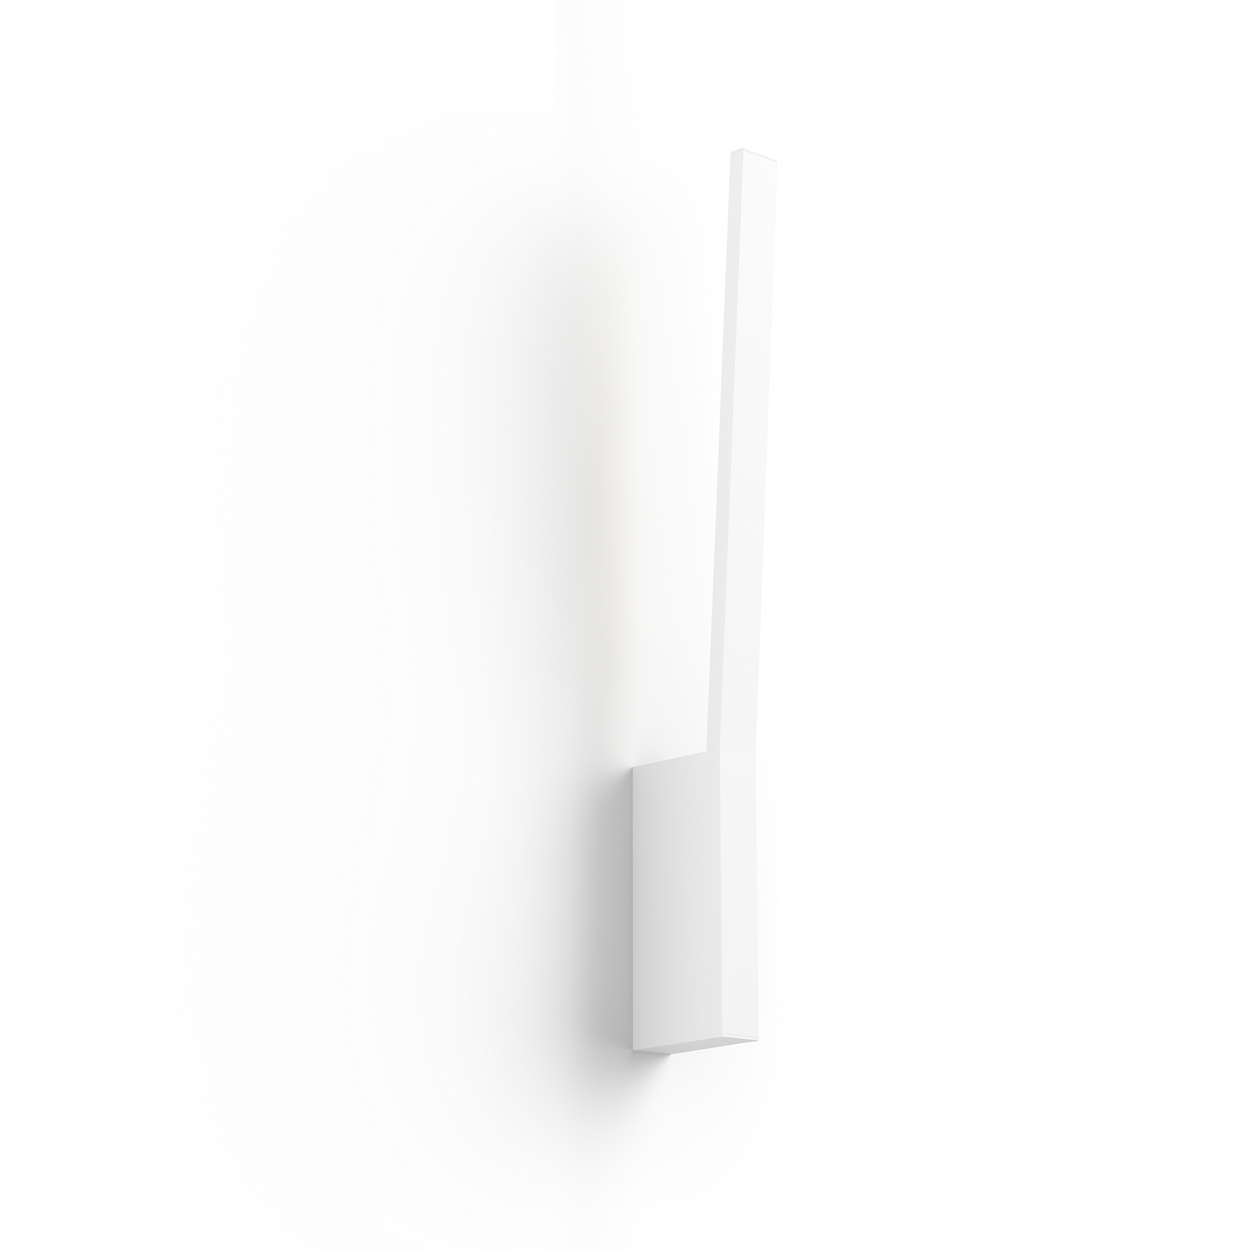 PHILIPS Liane Nástěnné svítidlo,  Hue White and color,  230V,  1x12W integr.LED,  Bílá0 